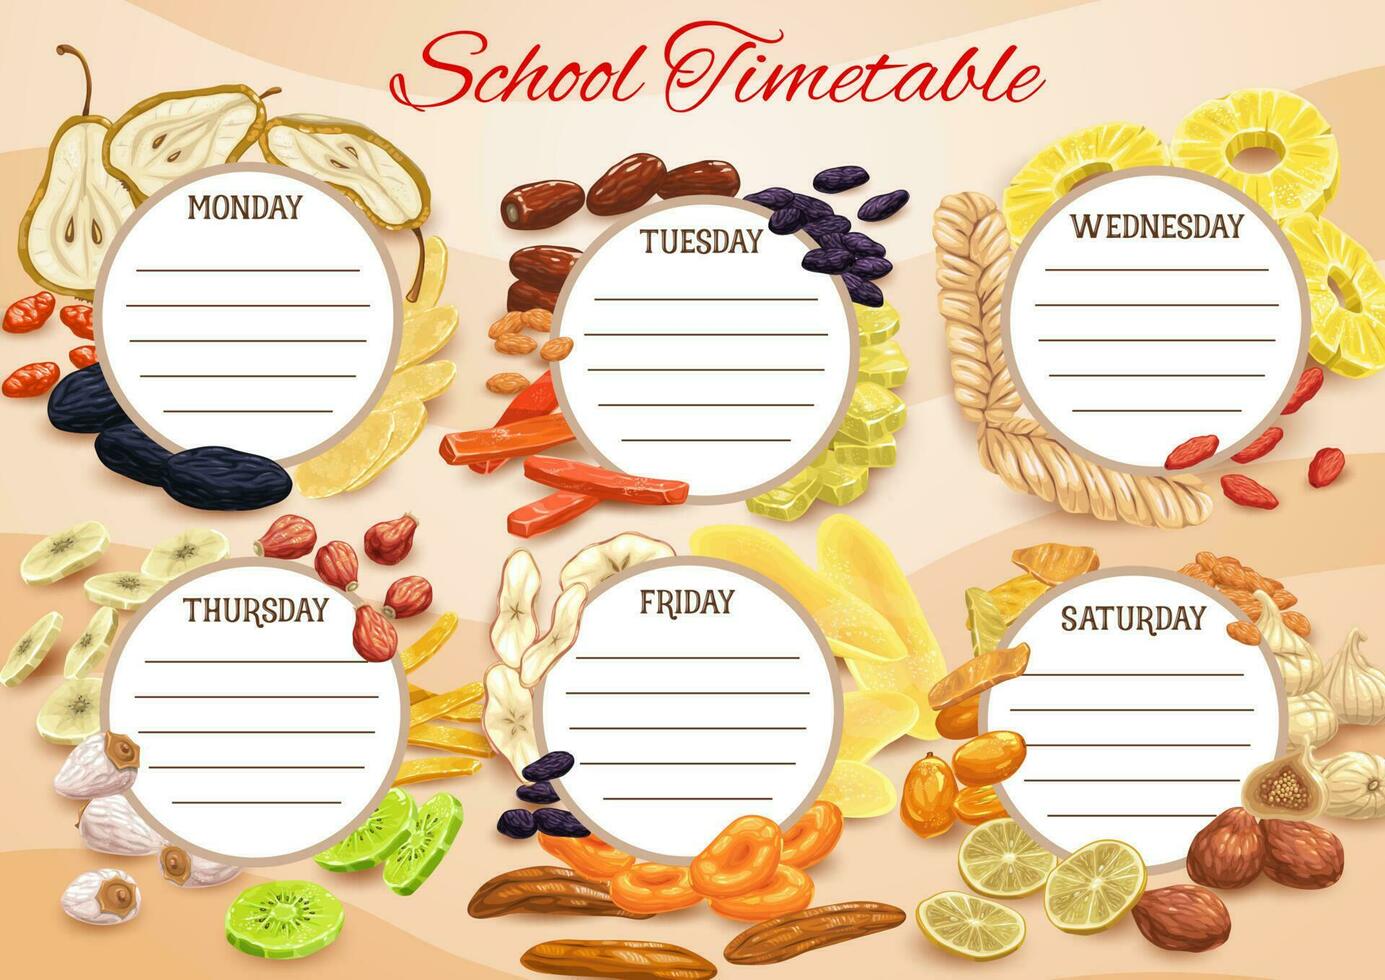 School timetable, schedule planner, dried fruits vector